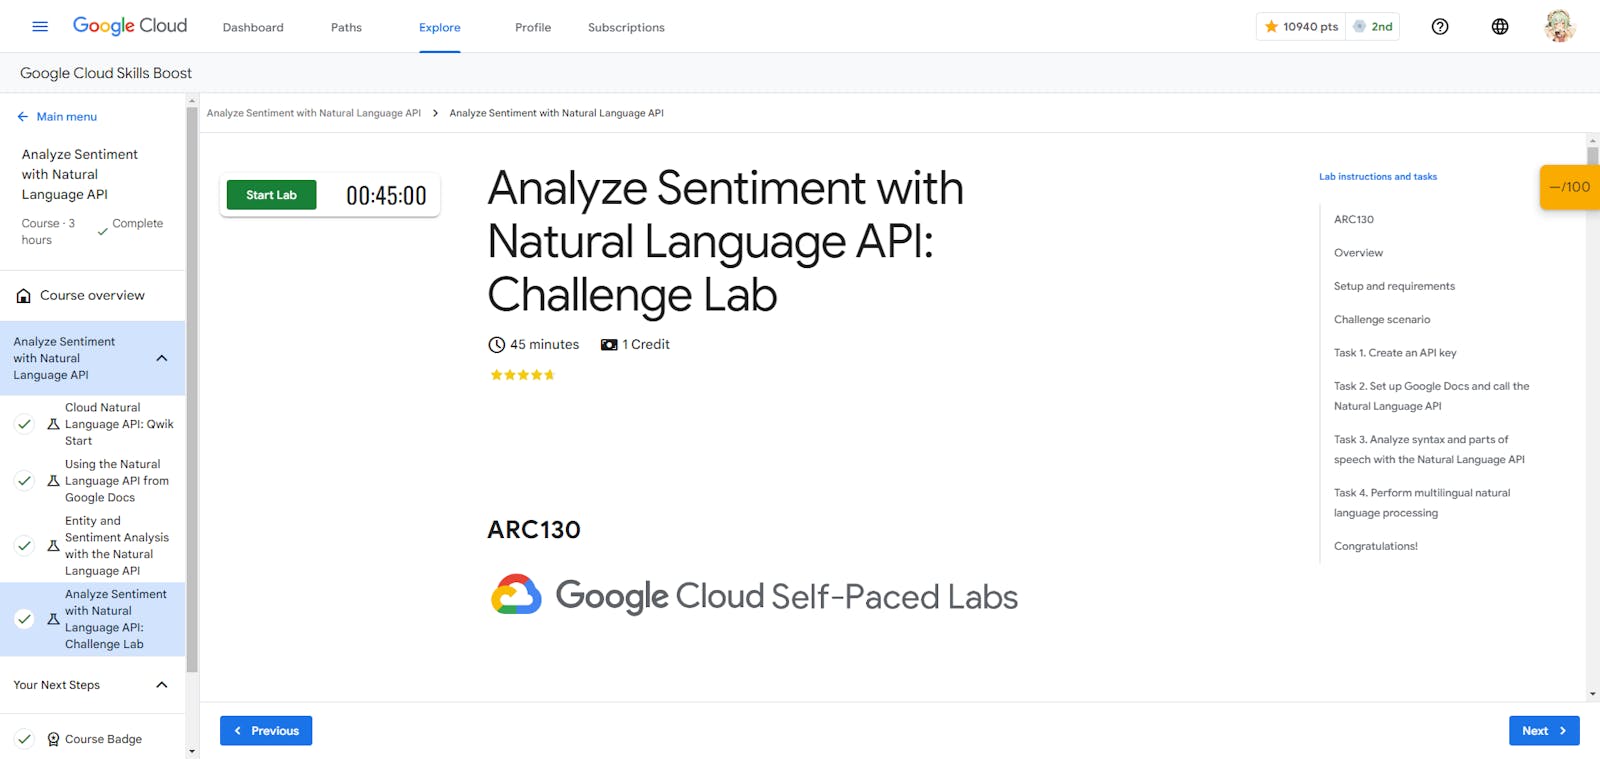 Analyze Sentiment with Natural Language API: Challenge Lab - ARC130